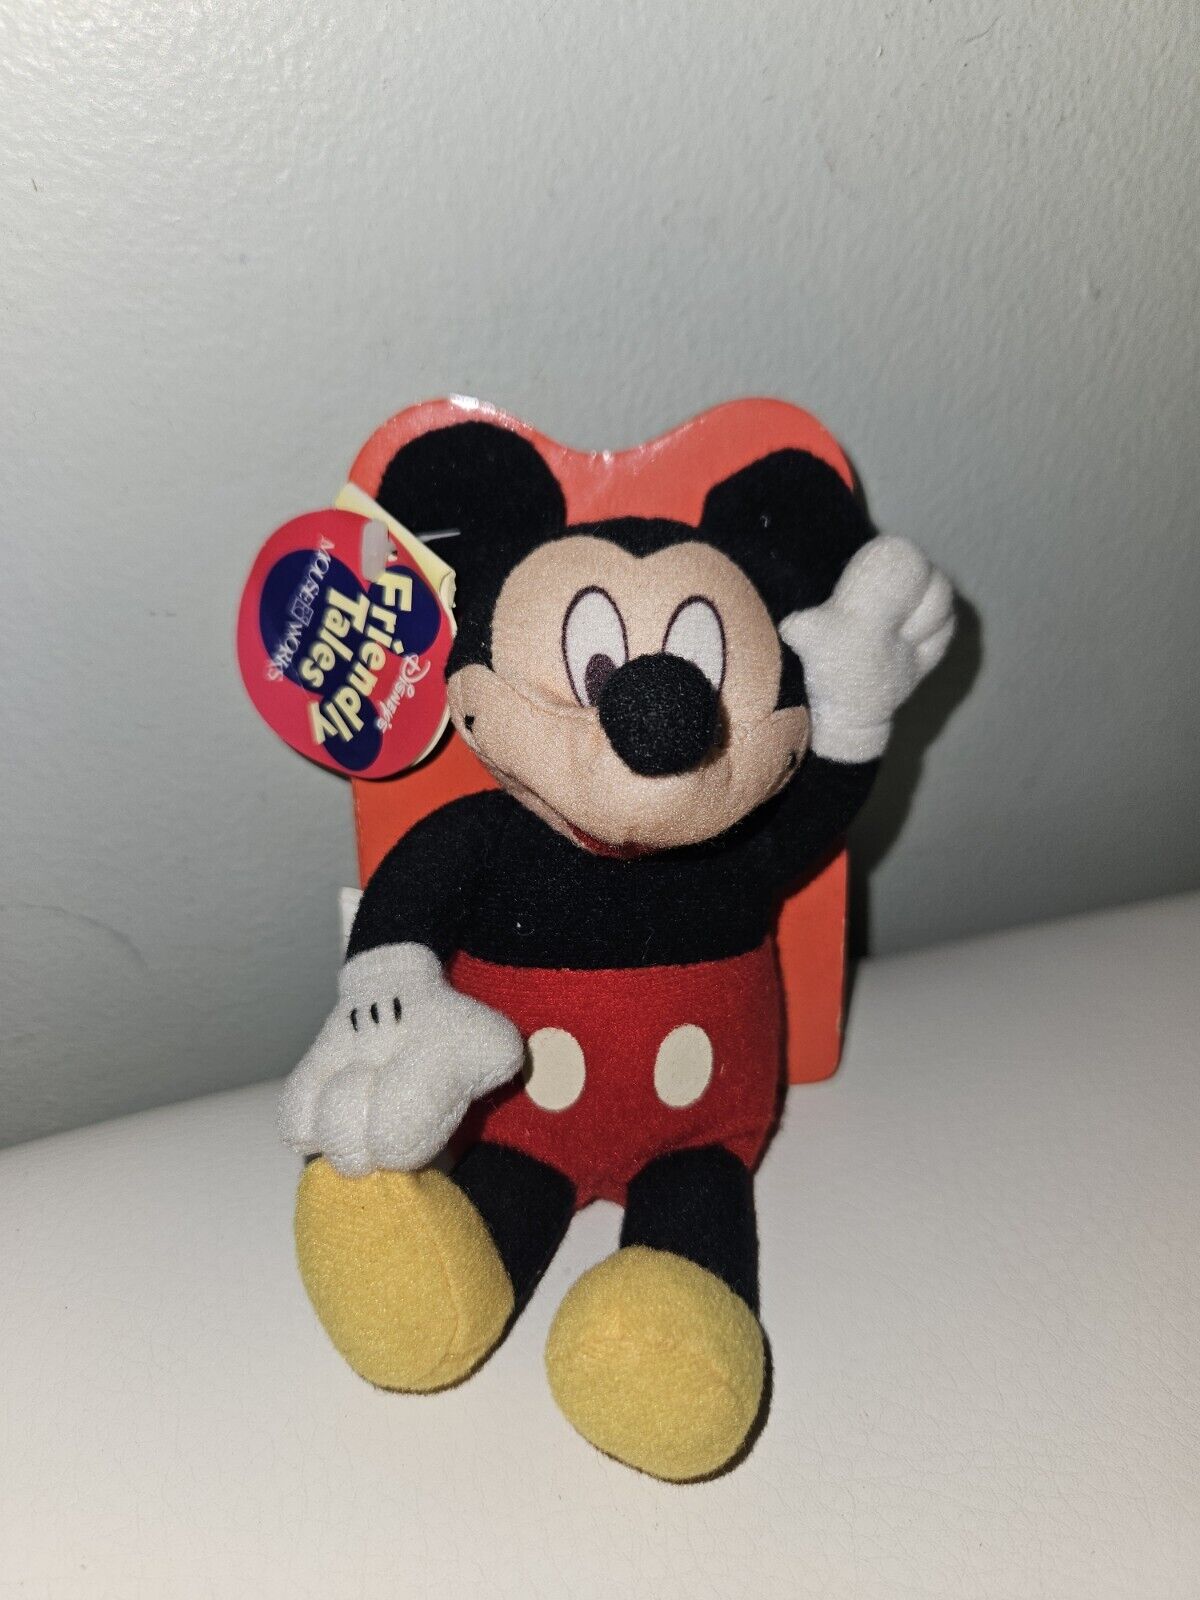 Mickey mouse plush, 1998 Disney friendly tales, mini book